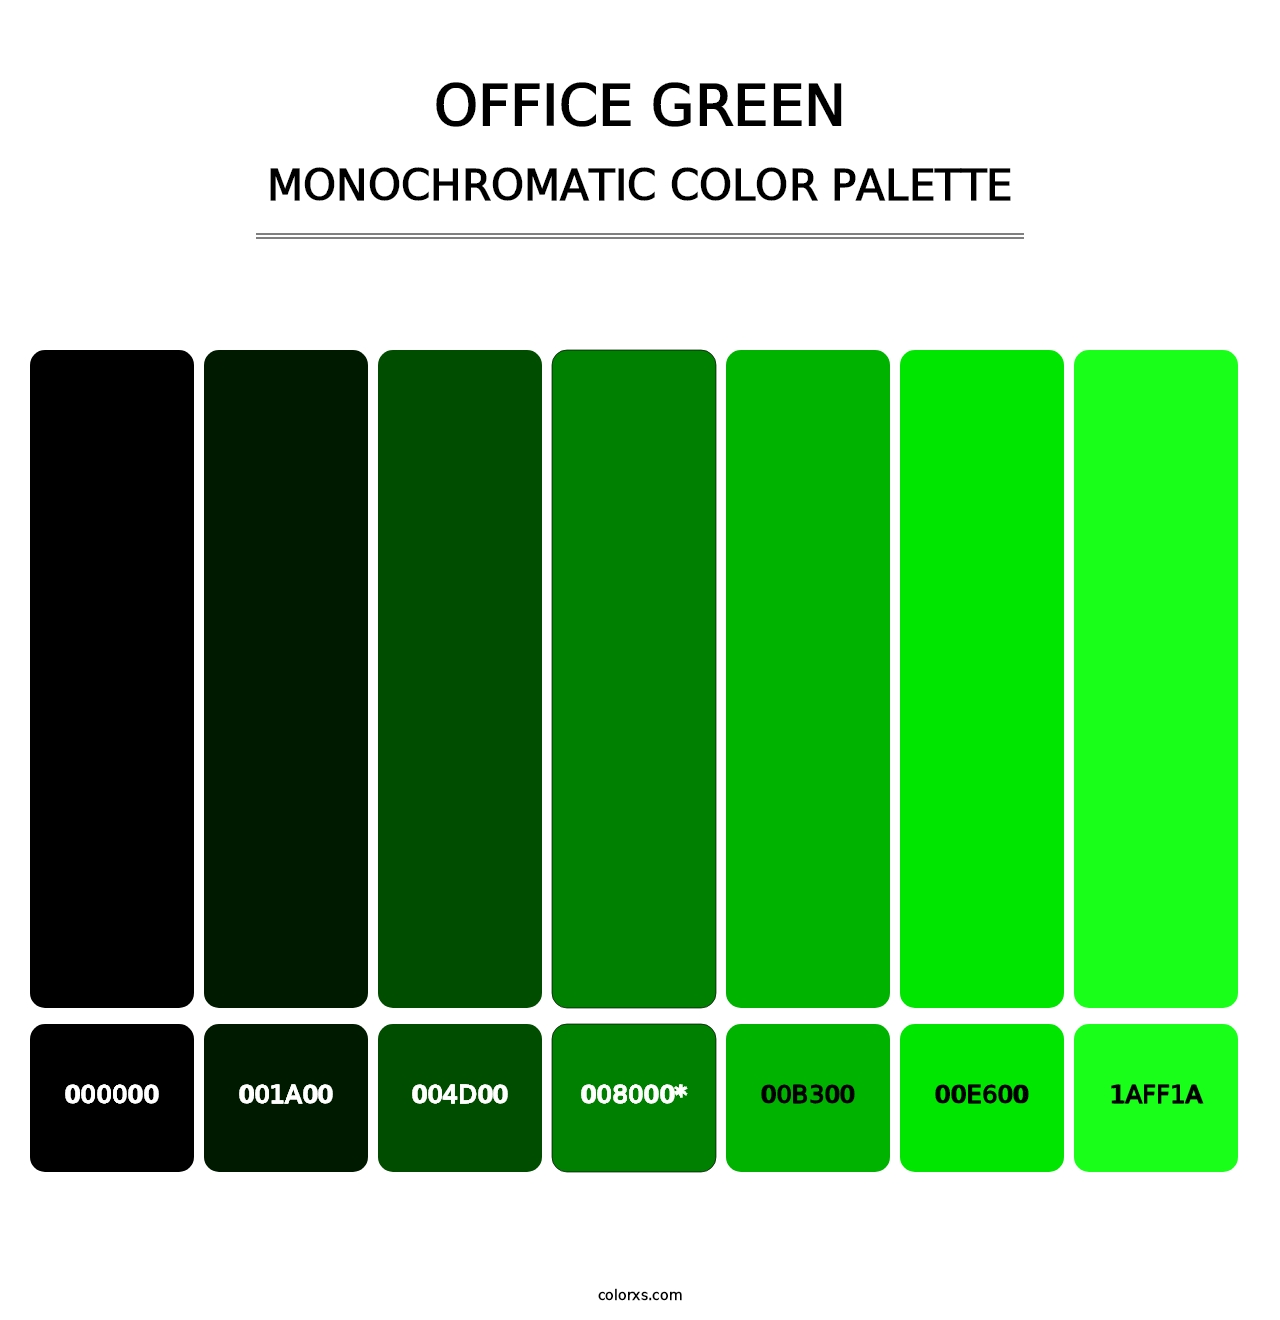 Office Green - Monochromatic Color Palette